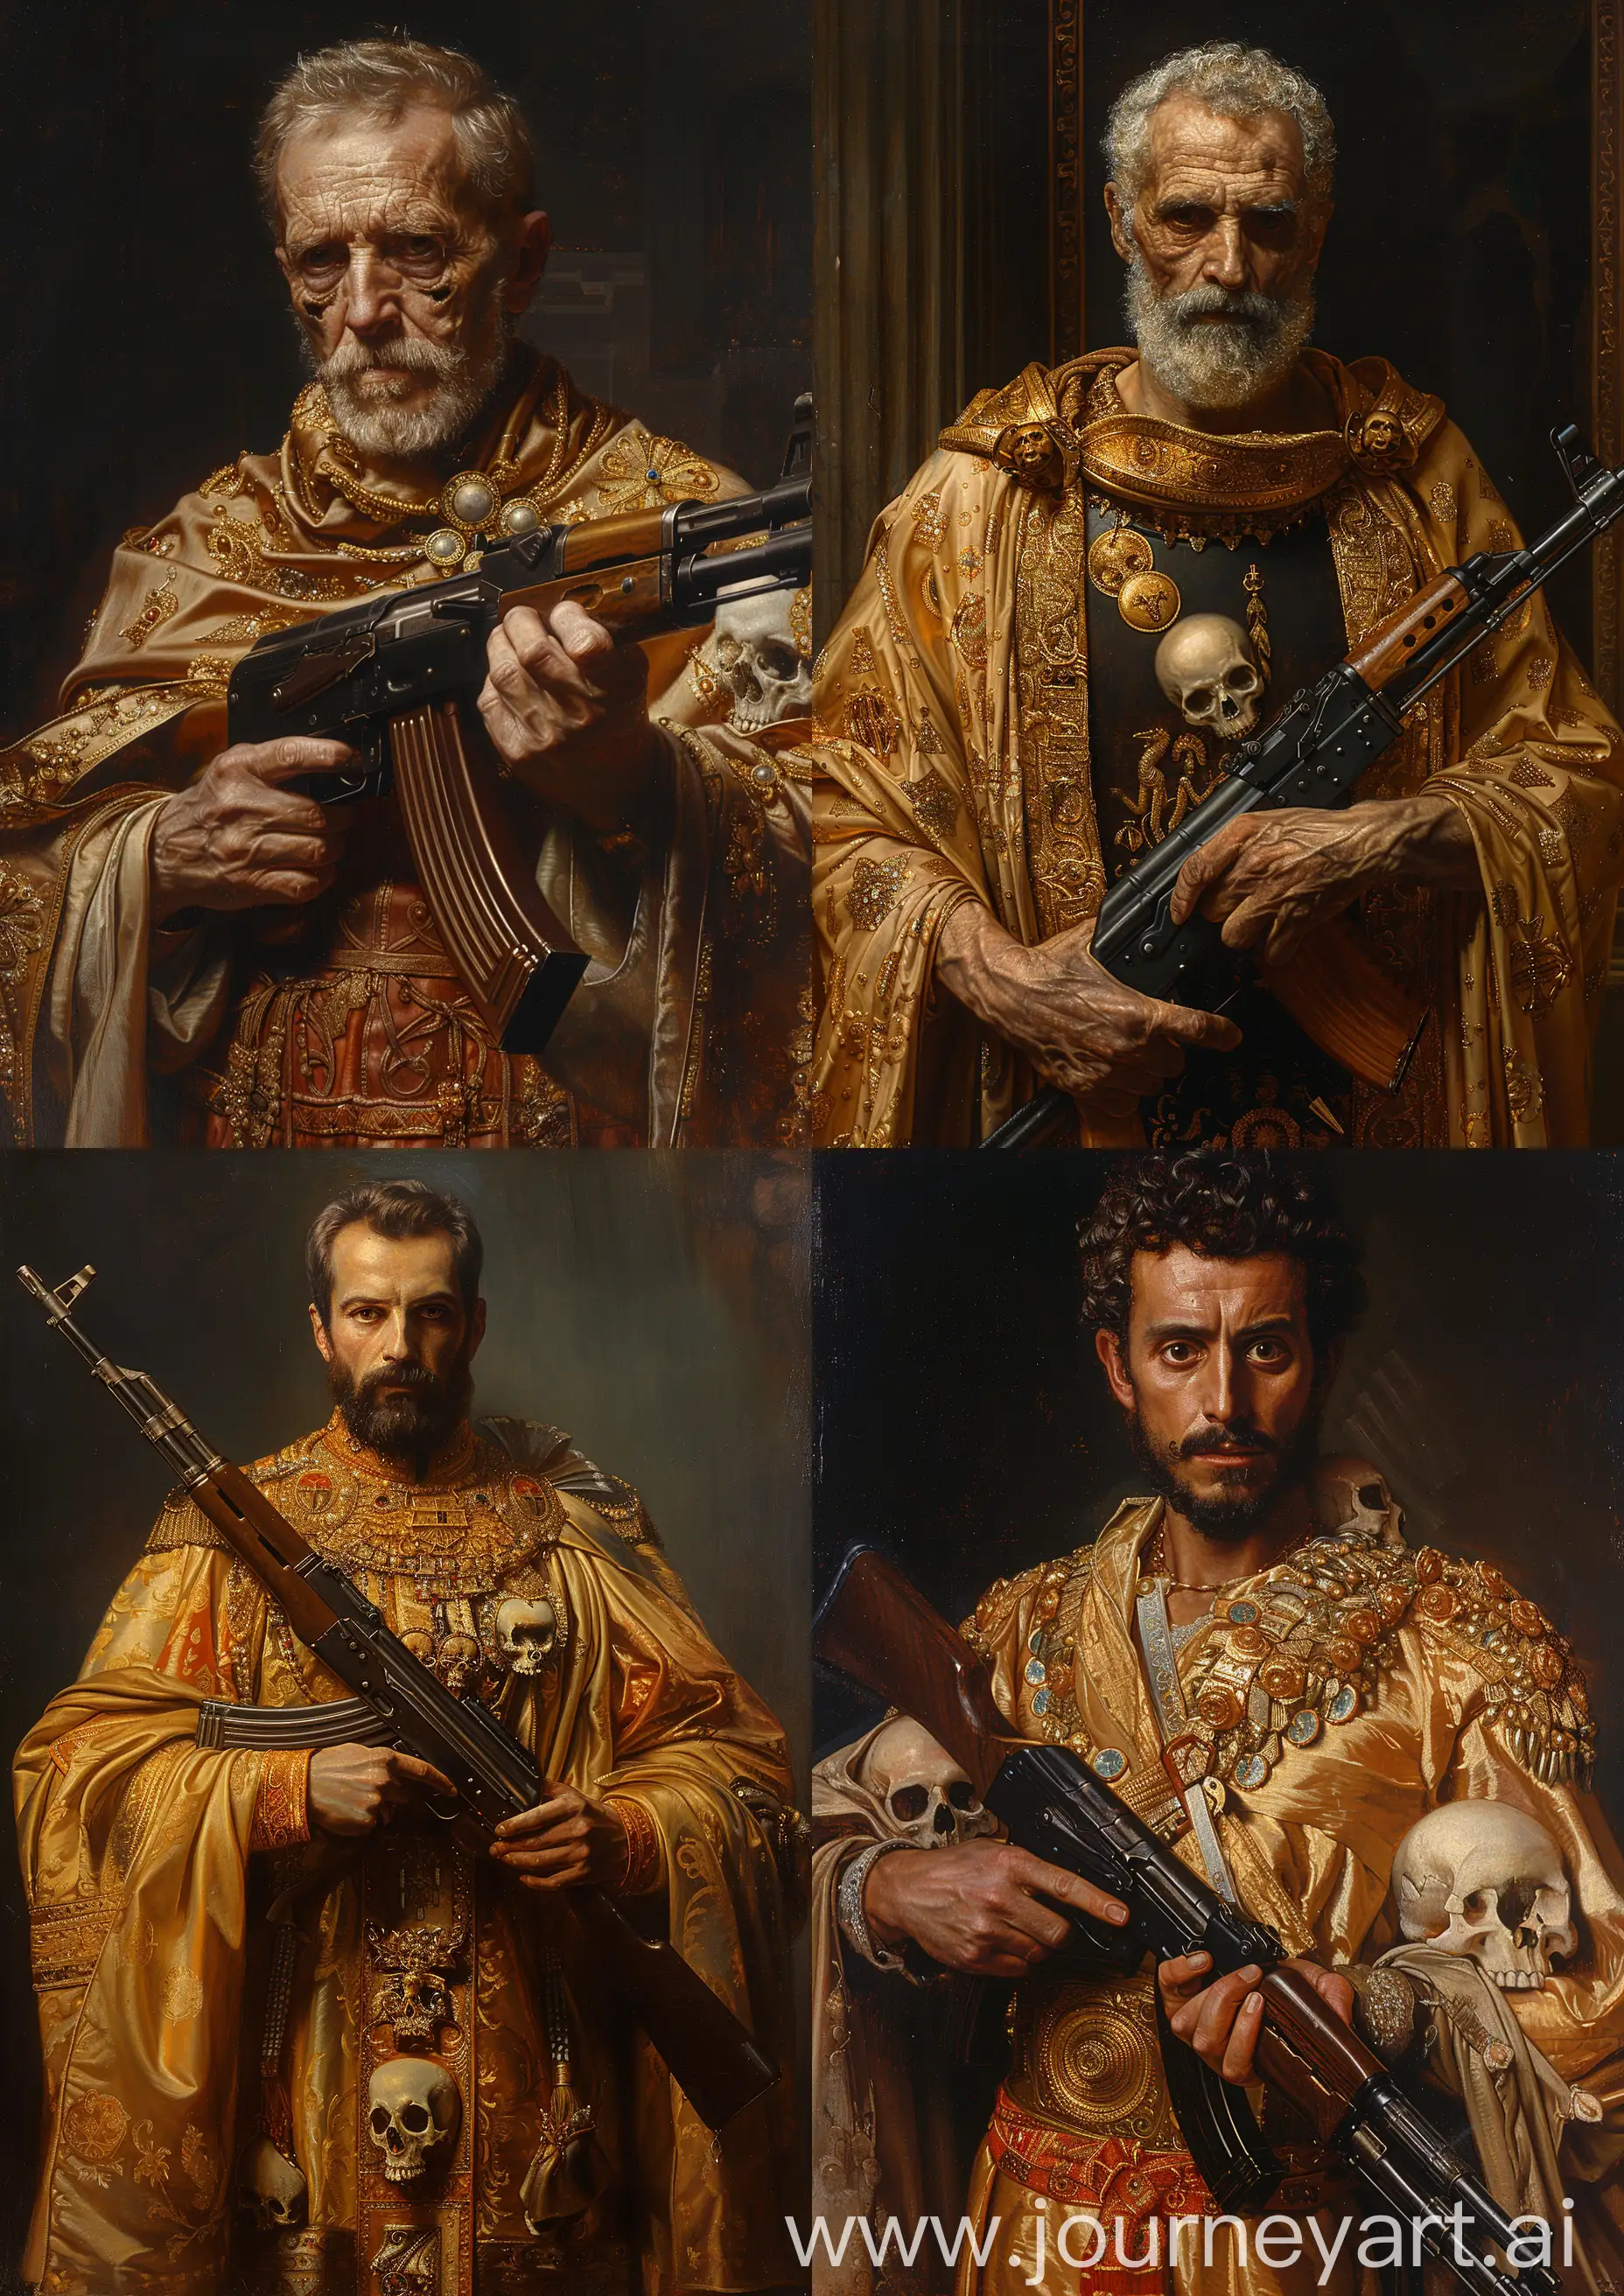 Edward-BurneJones-Inspired-Portrait-of-Hannibal-Barca-in-Ornate-Gold-Robes-with-Kalashnikov